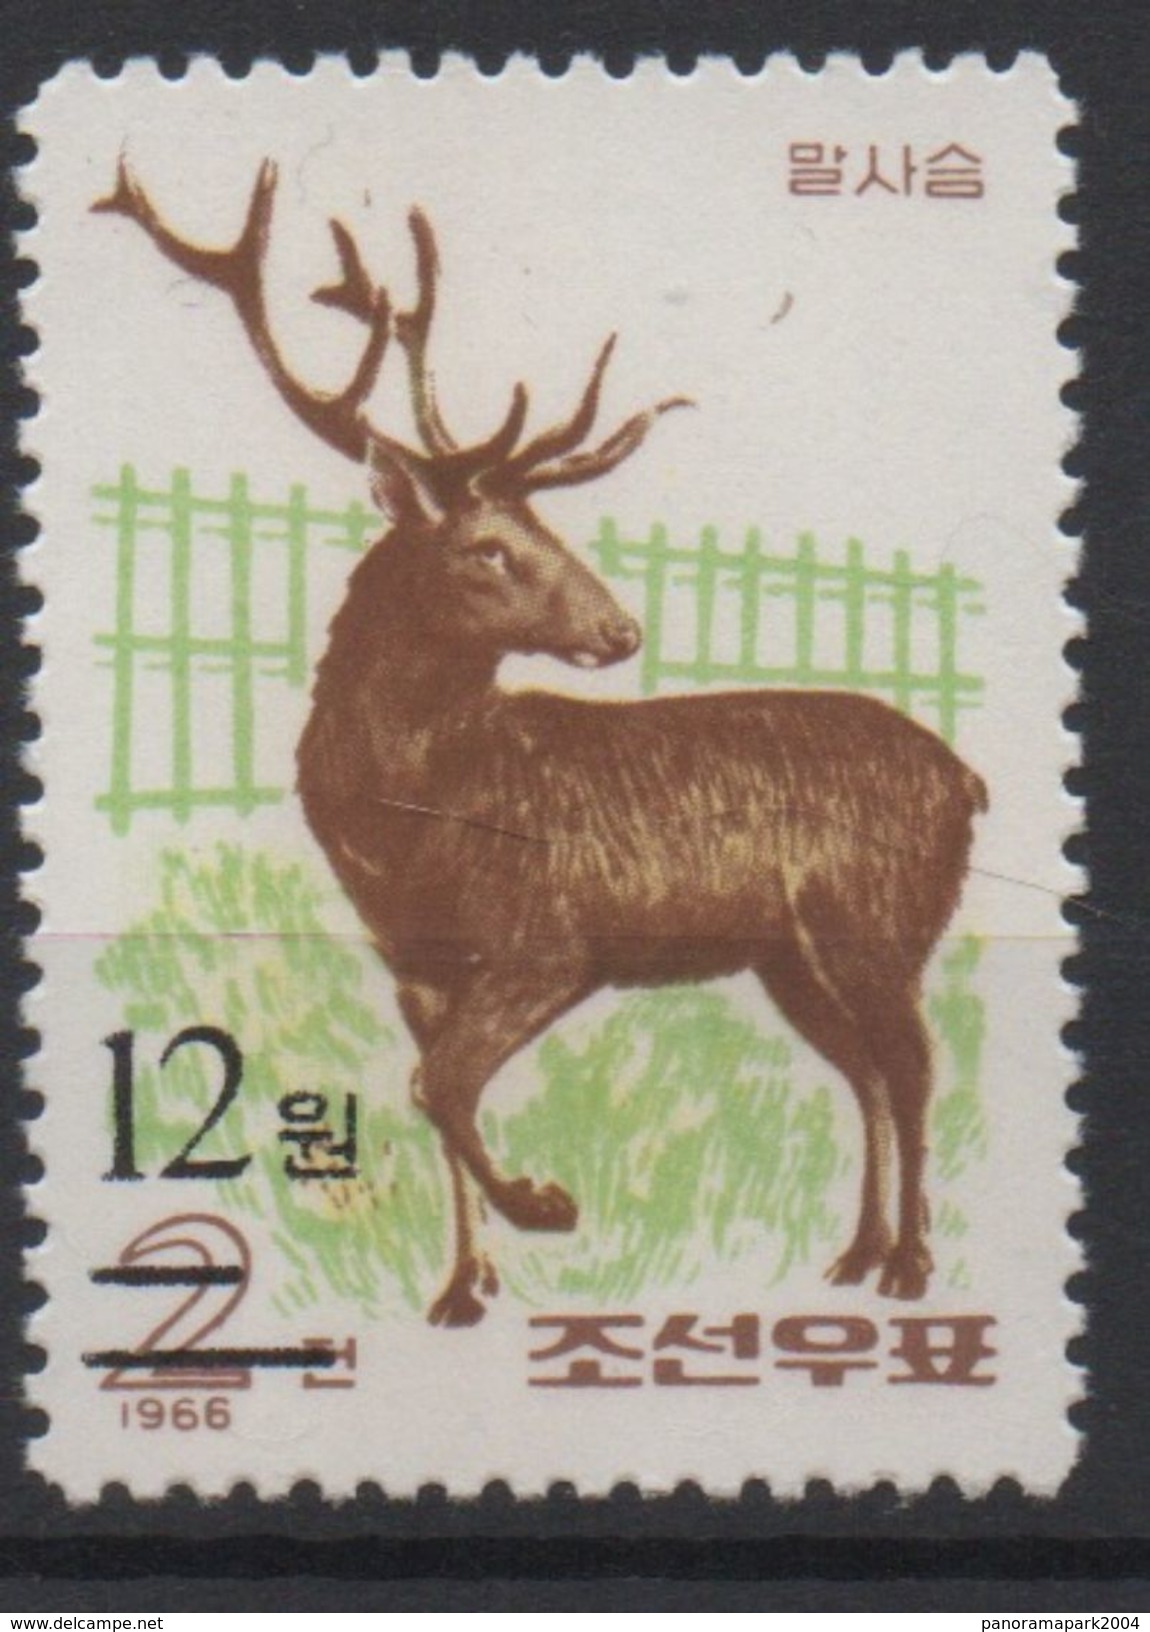 North Korea Corée Du Nord 2006 Mi. 5073 Surchargé OVERPRINT Faune Fauna Deer Hirsch Cerf MNH** RARE - Wild